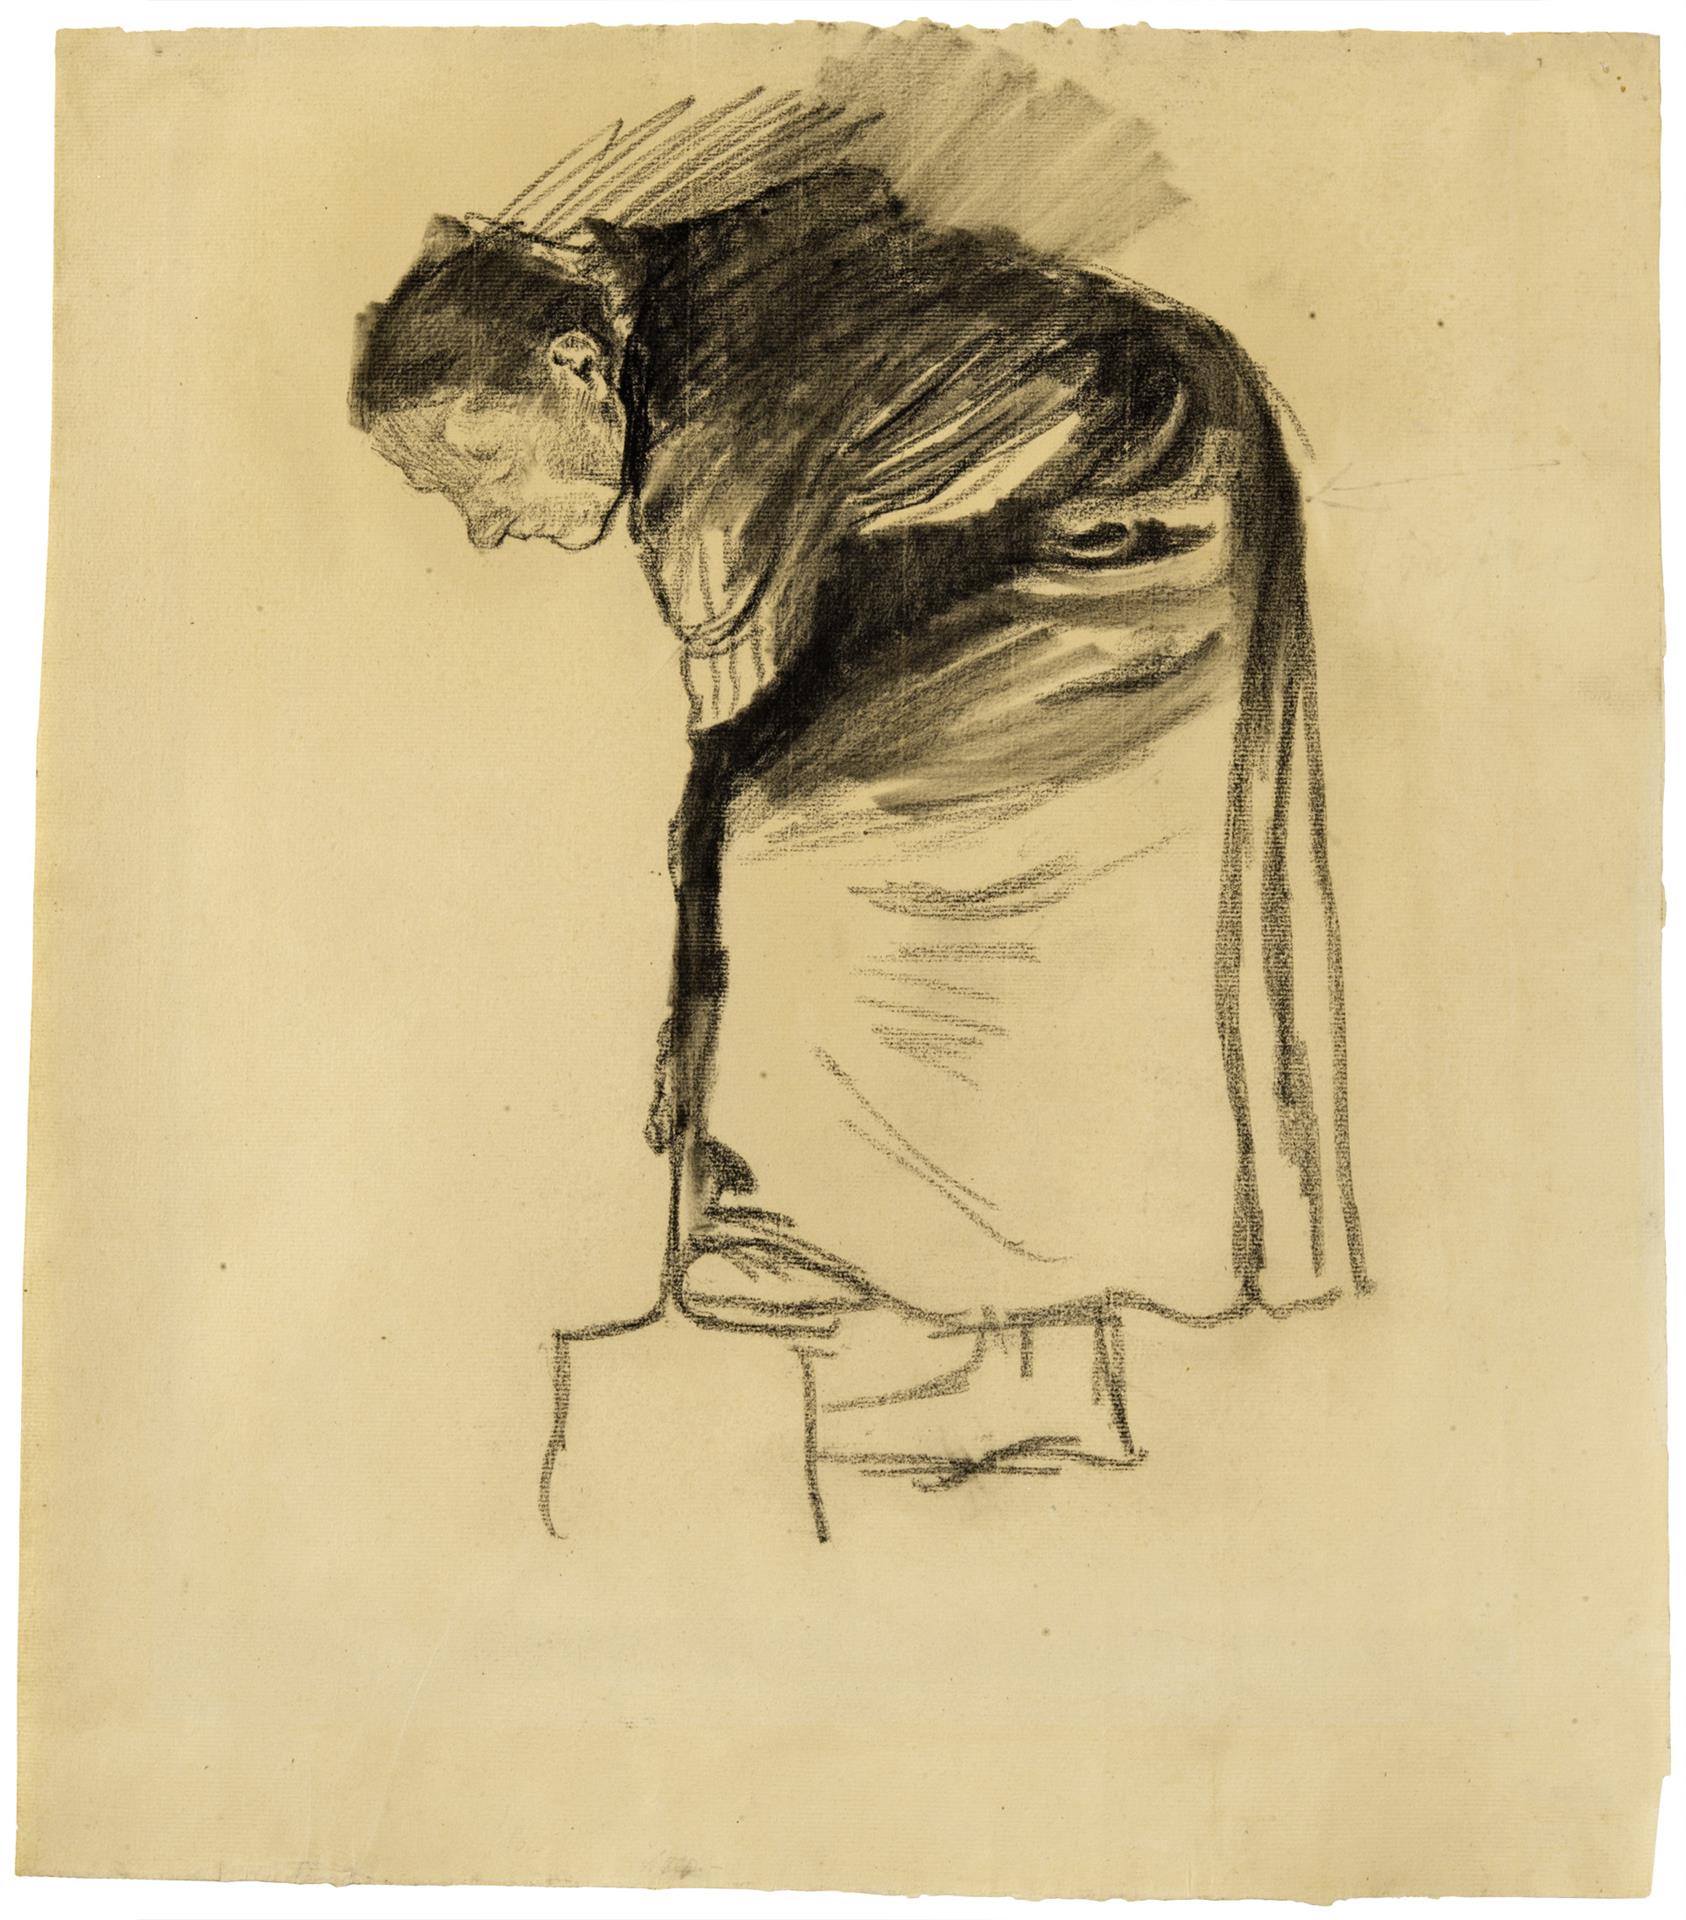 Käthe Kollwitz, Woman digging, 1903, charcoal on Ingres paper, NT 254, Cologne Kollwitz Collection © Käthe Kollwitz Museum Köln